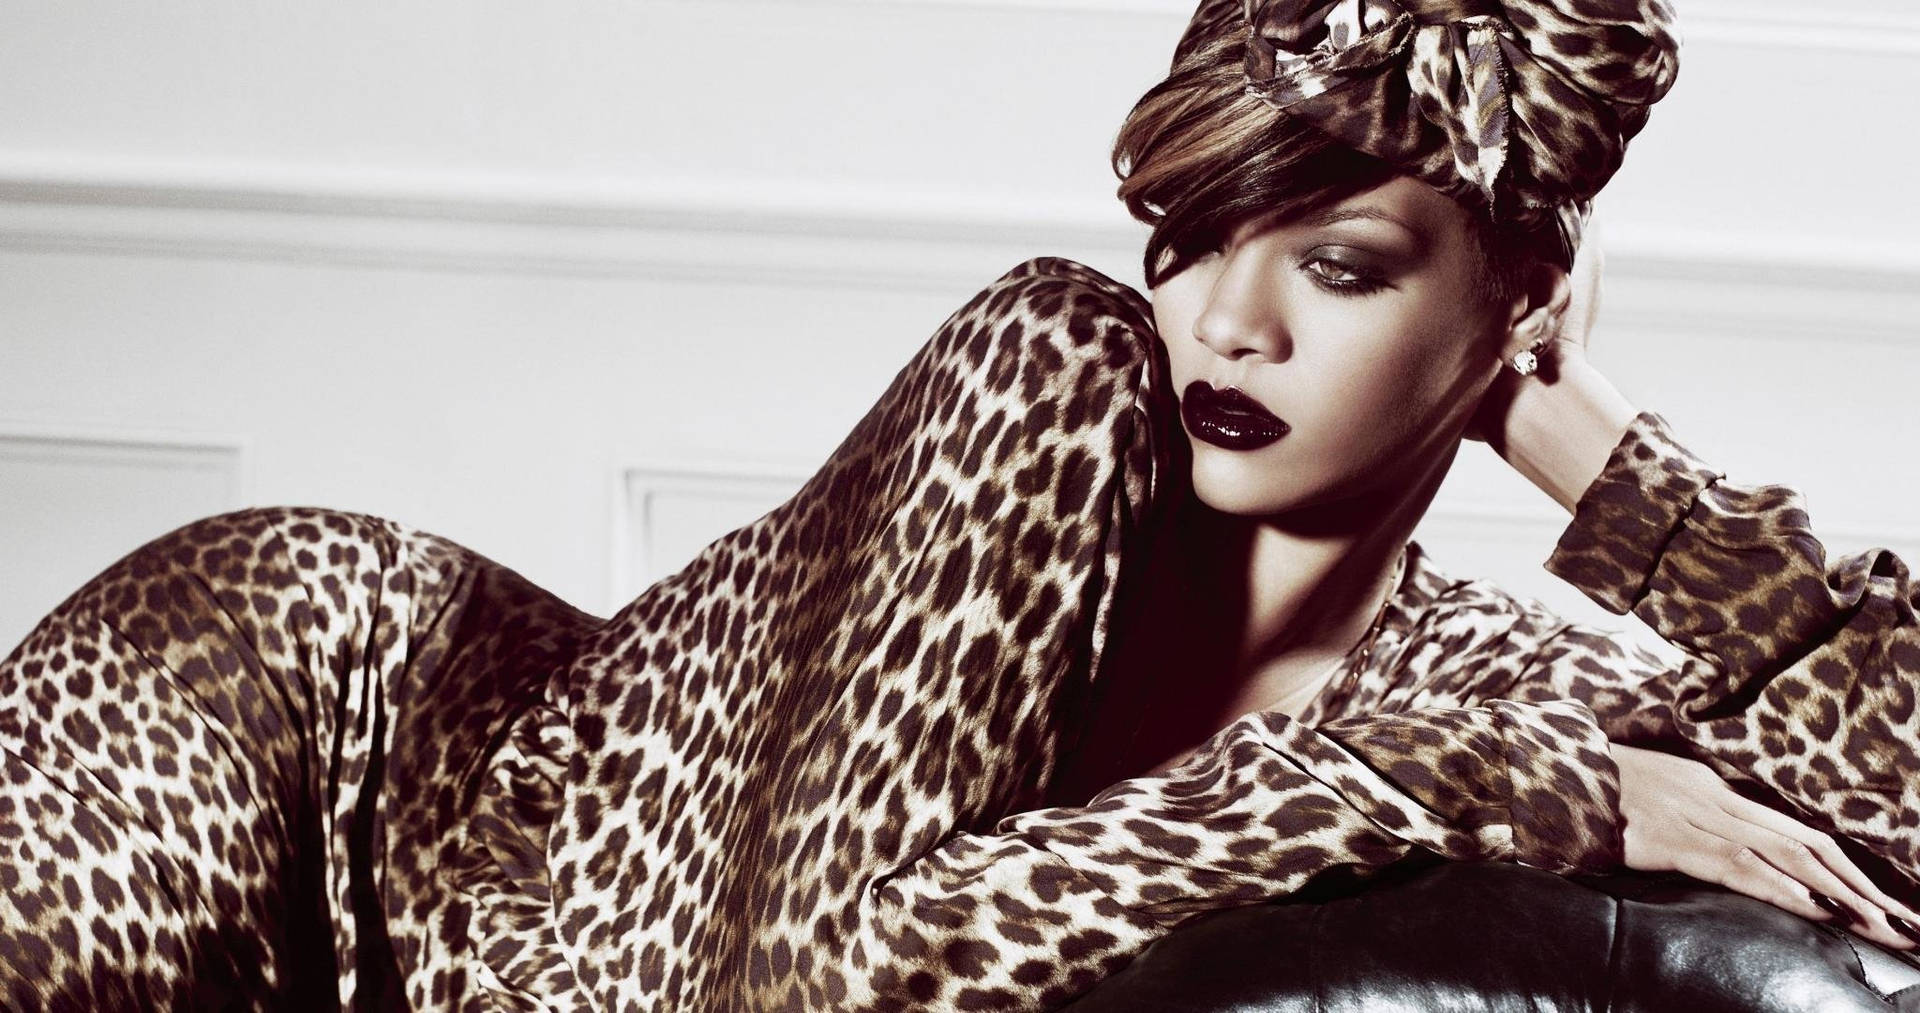 Rihanna struts her stuff in a fierce leopard print outfit Wallpaper